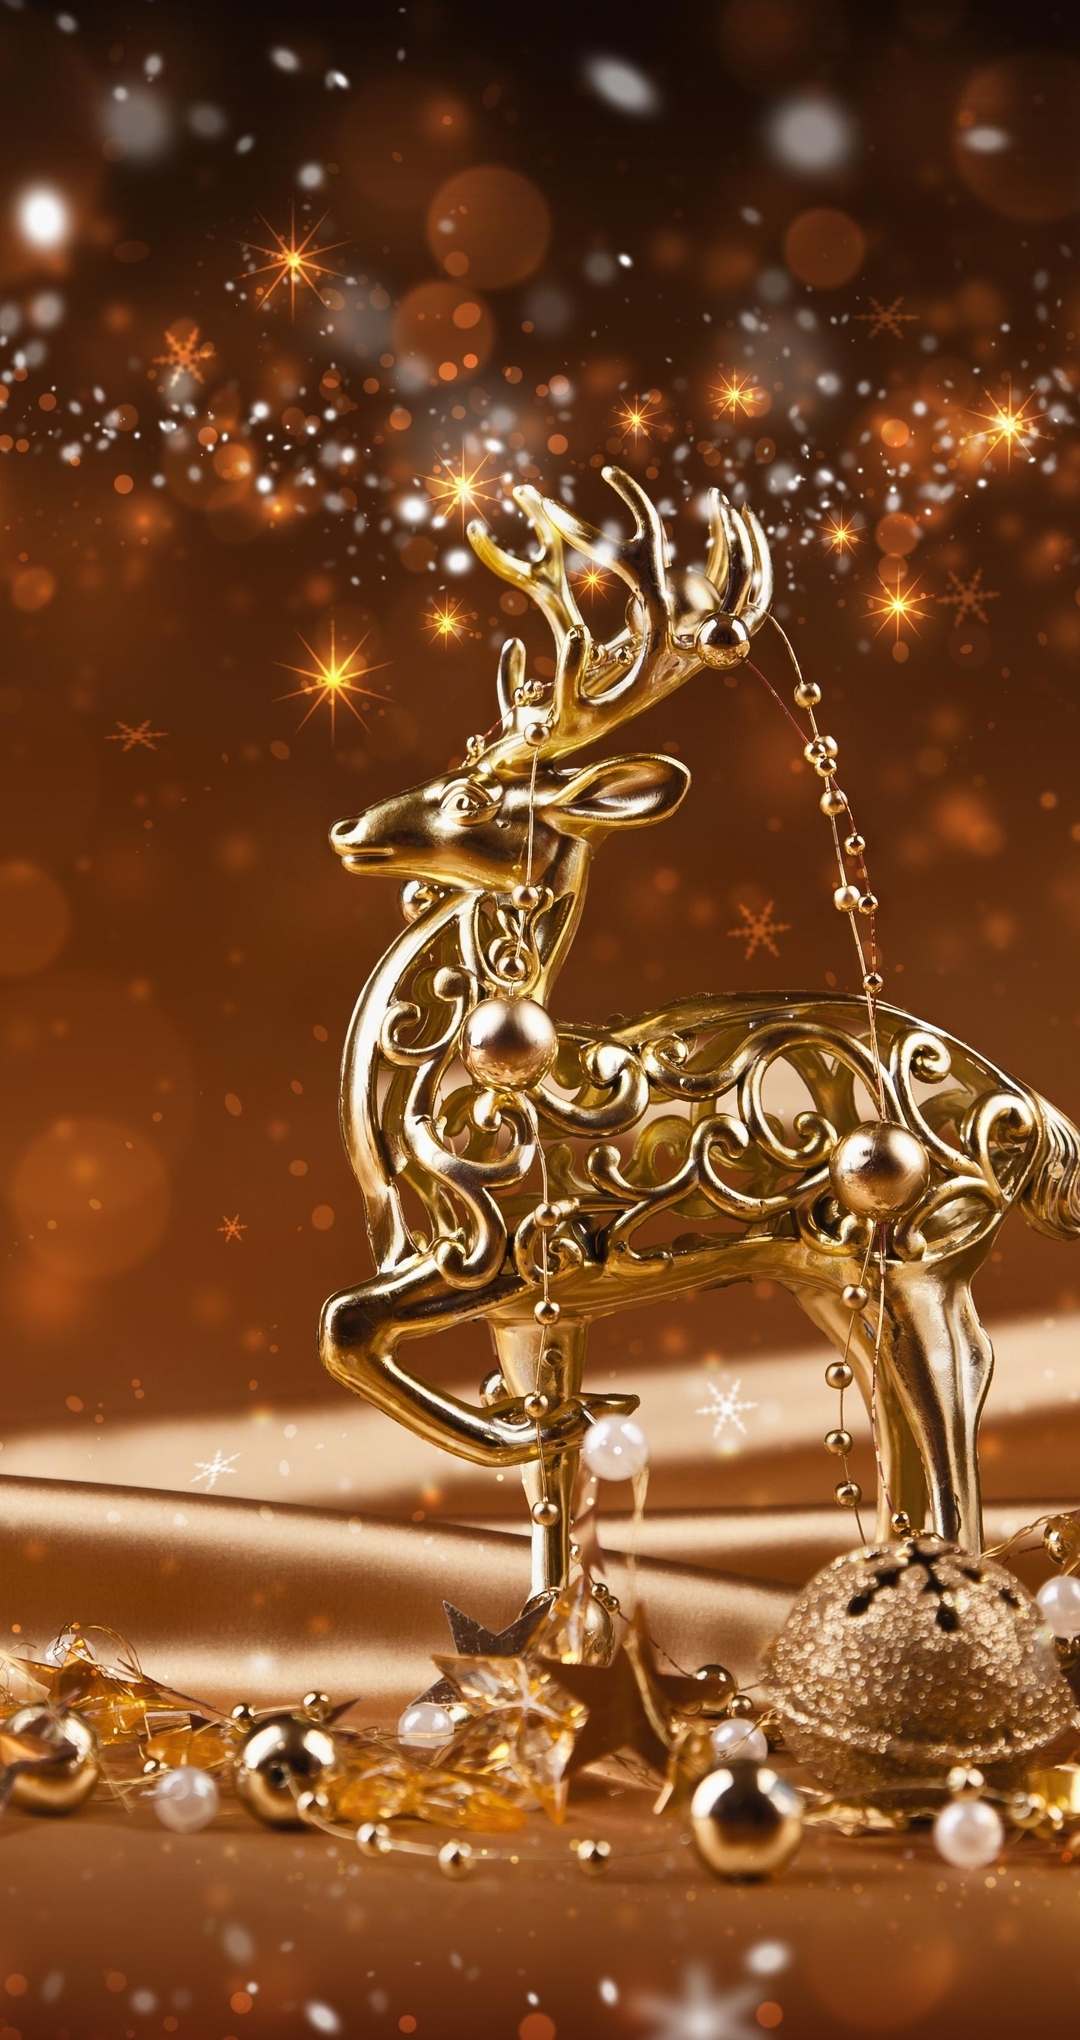 Image: Christmas, decoration, deer, figure, gift, glare